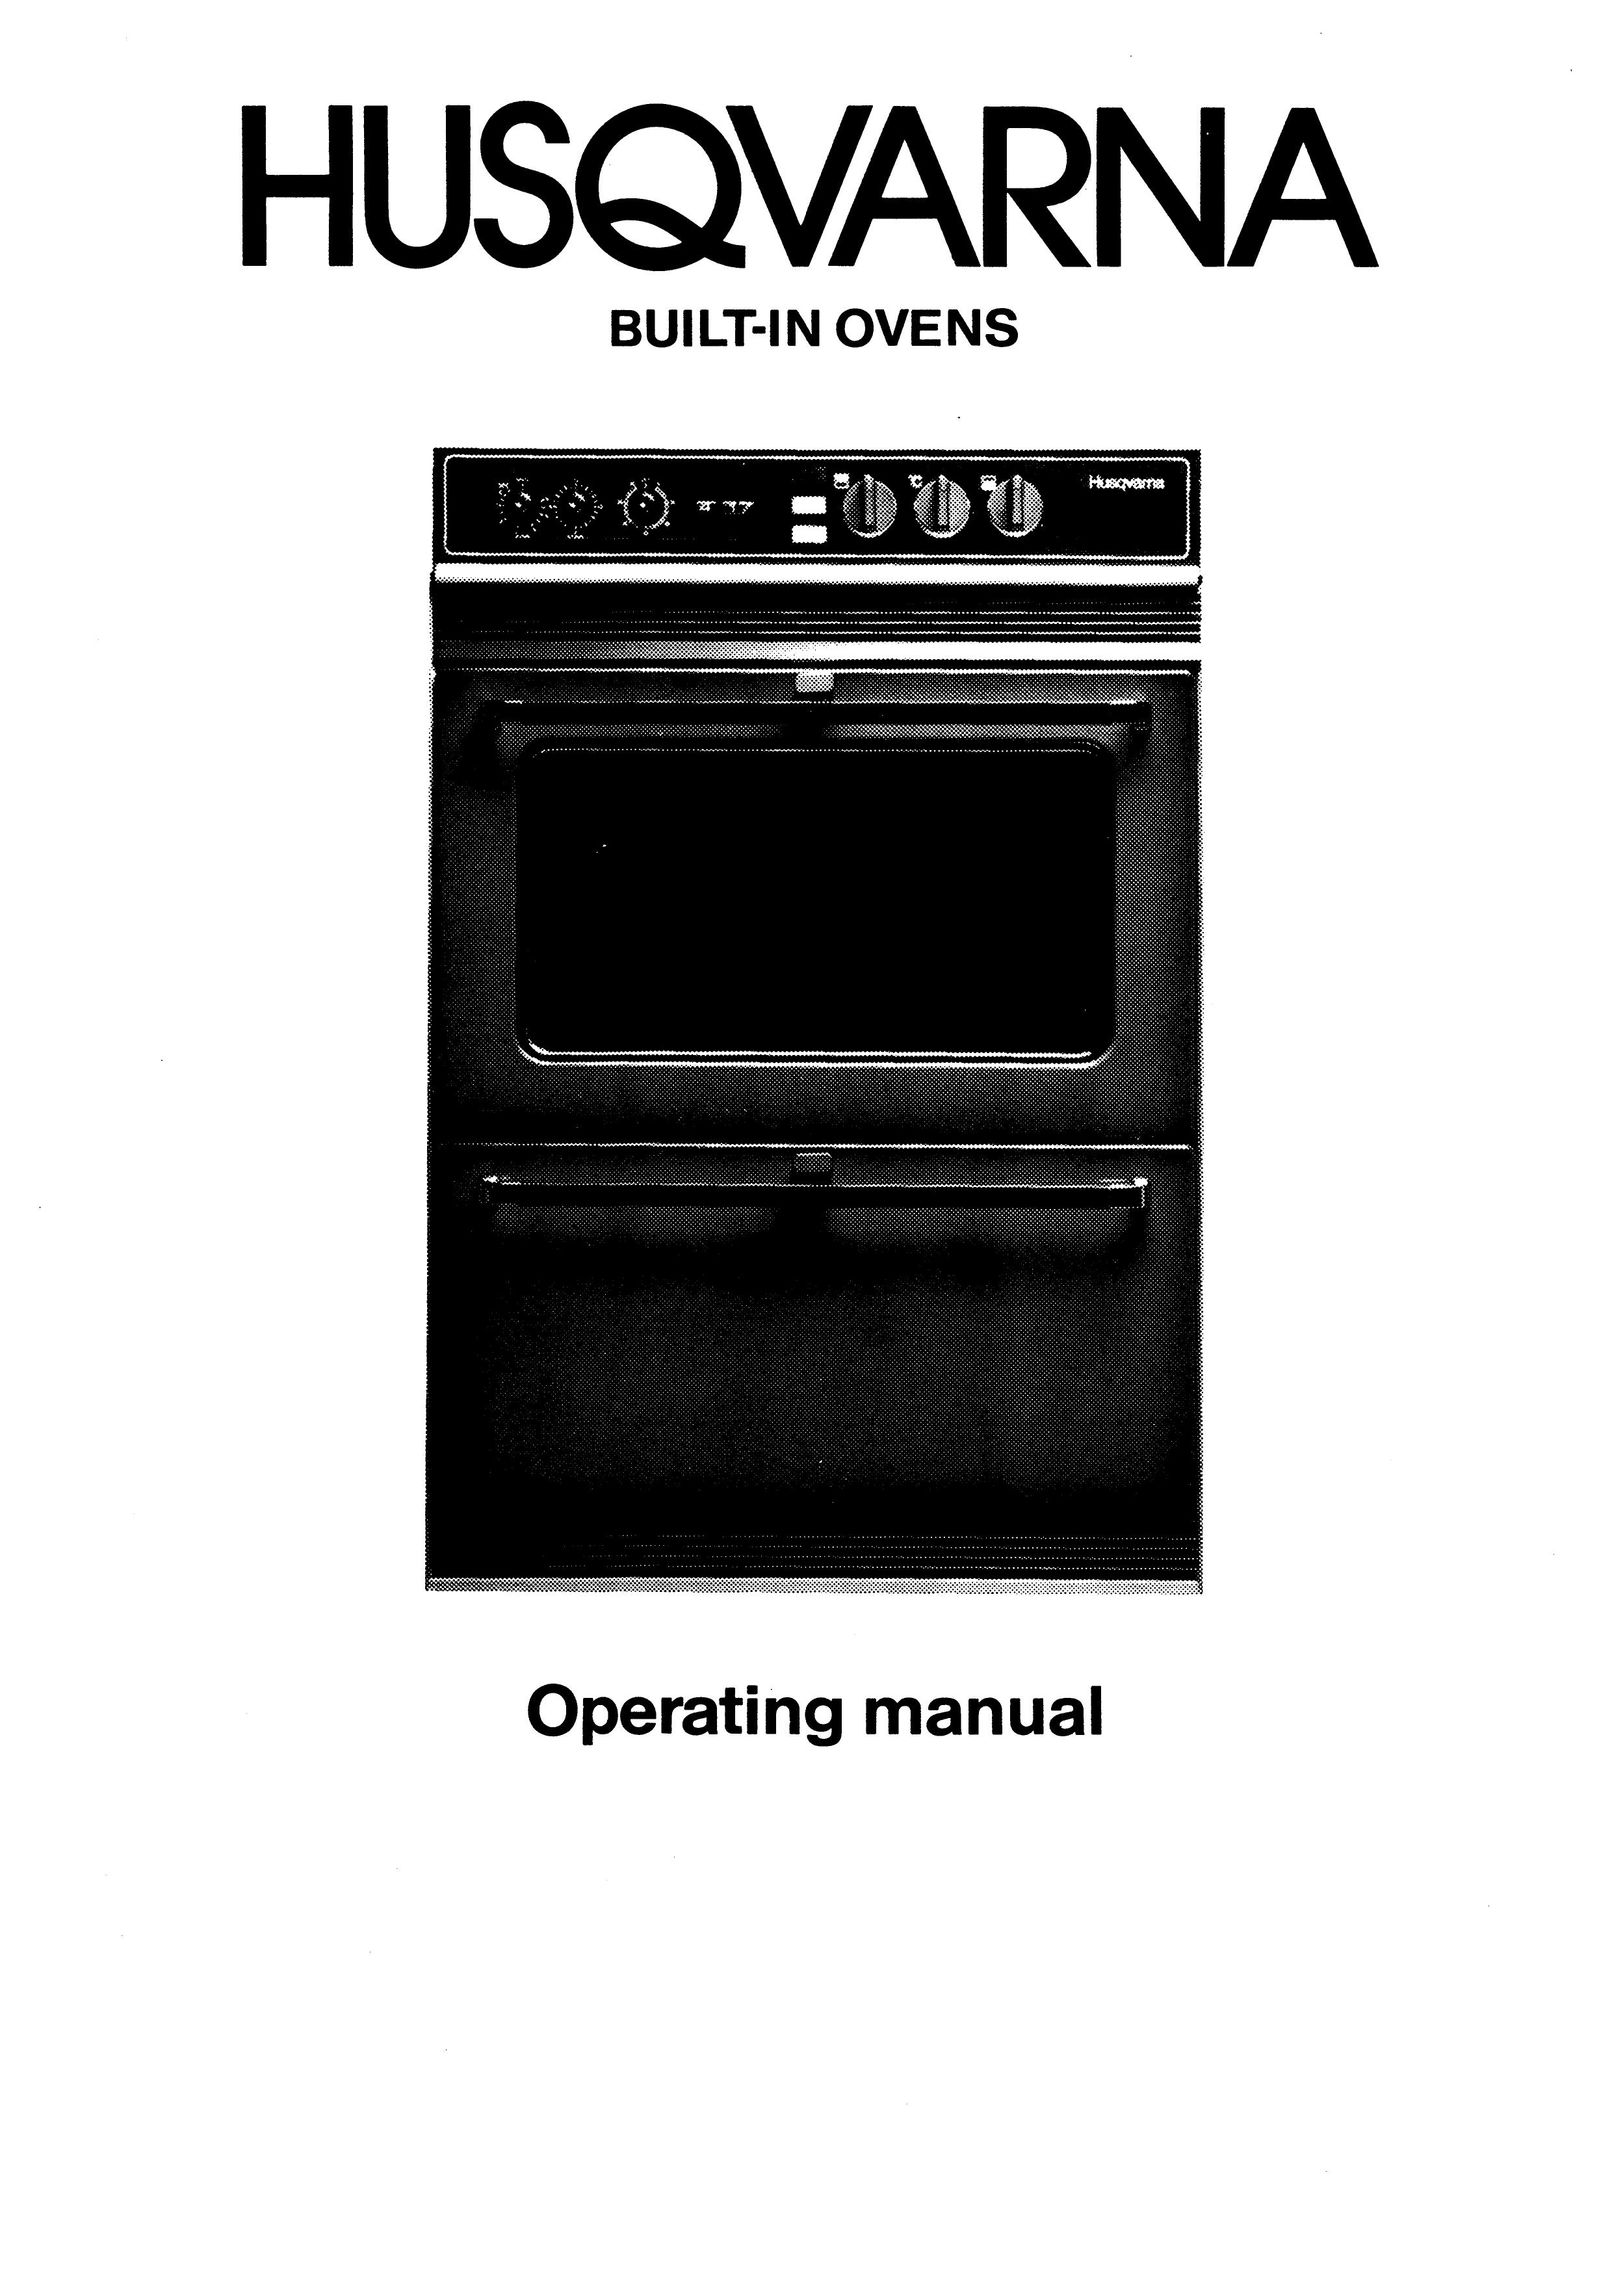 Husqvarna Built-in Oven Microwave Oven User Manual